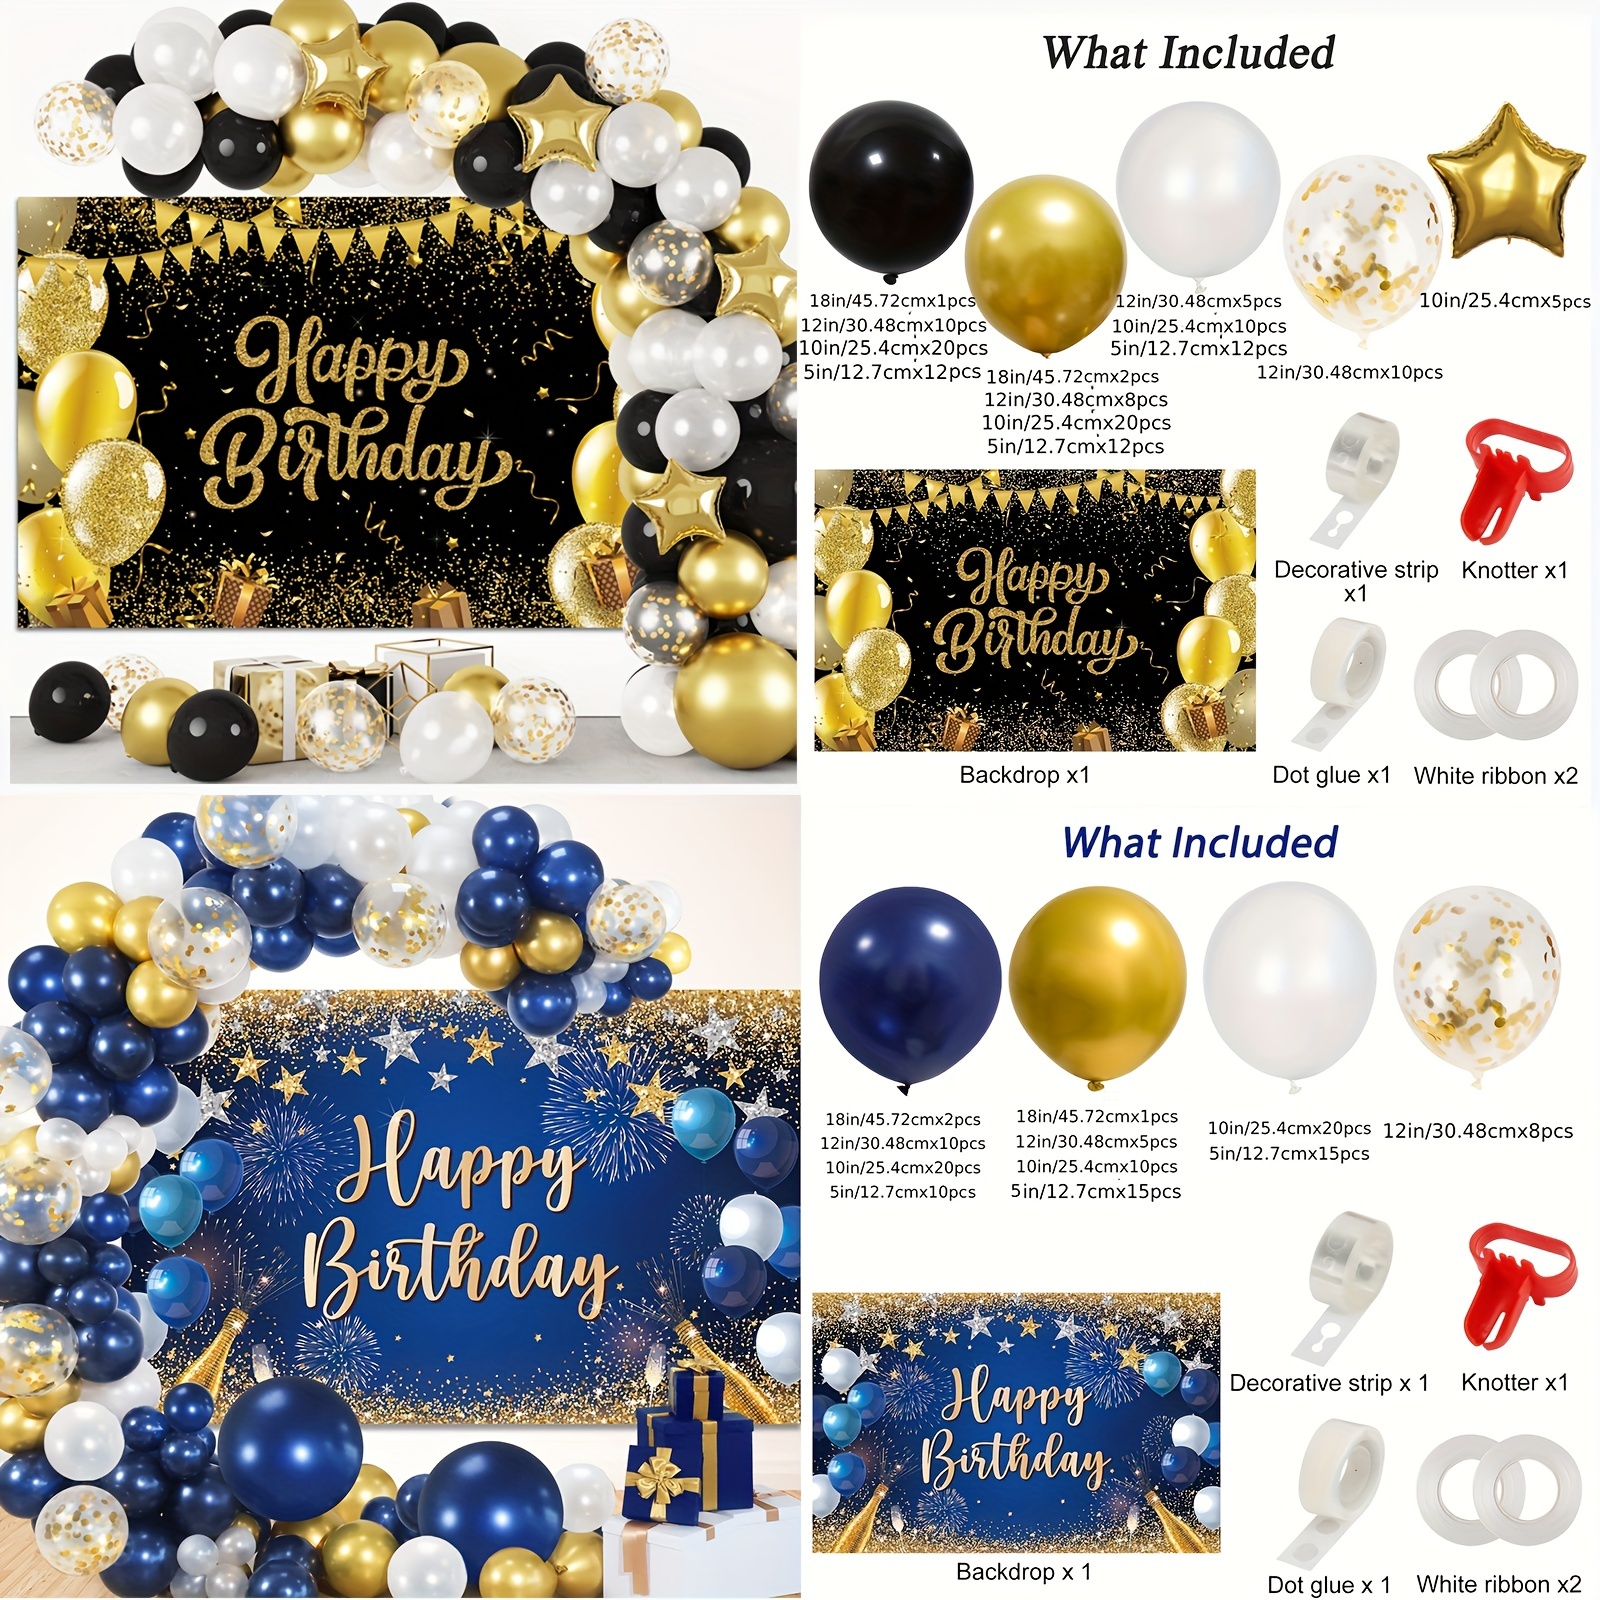 Blue Golden Happy Birthday Backdrop Balloons Photography Party Supplies  Decor